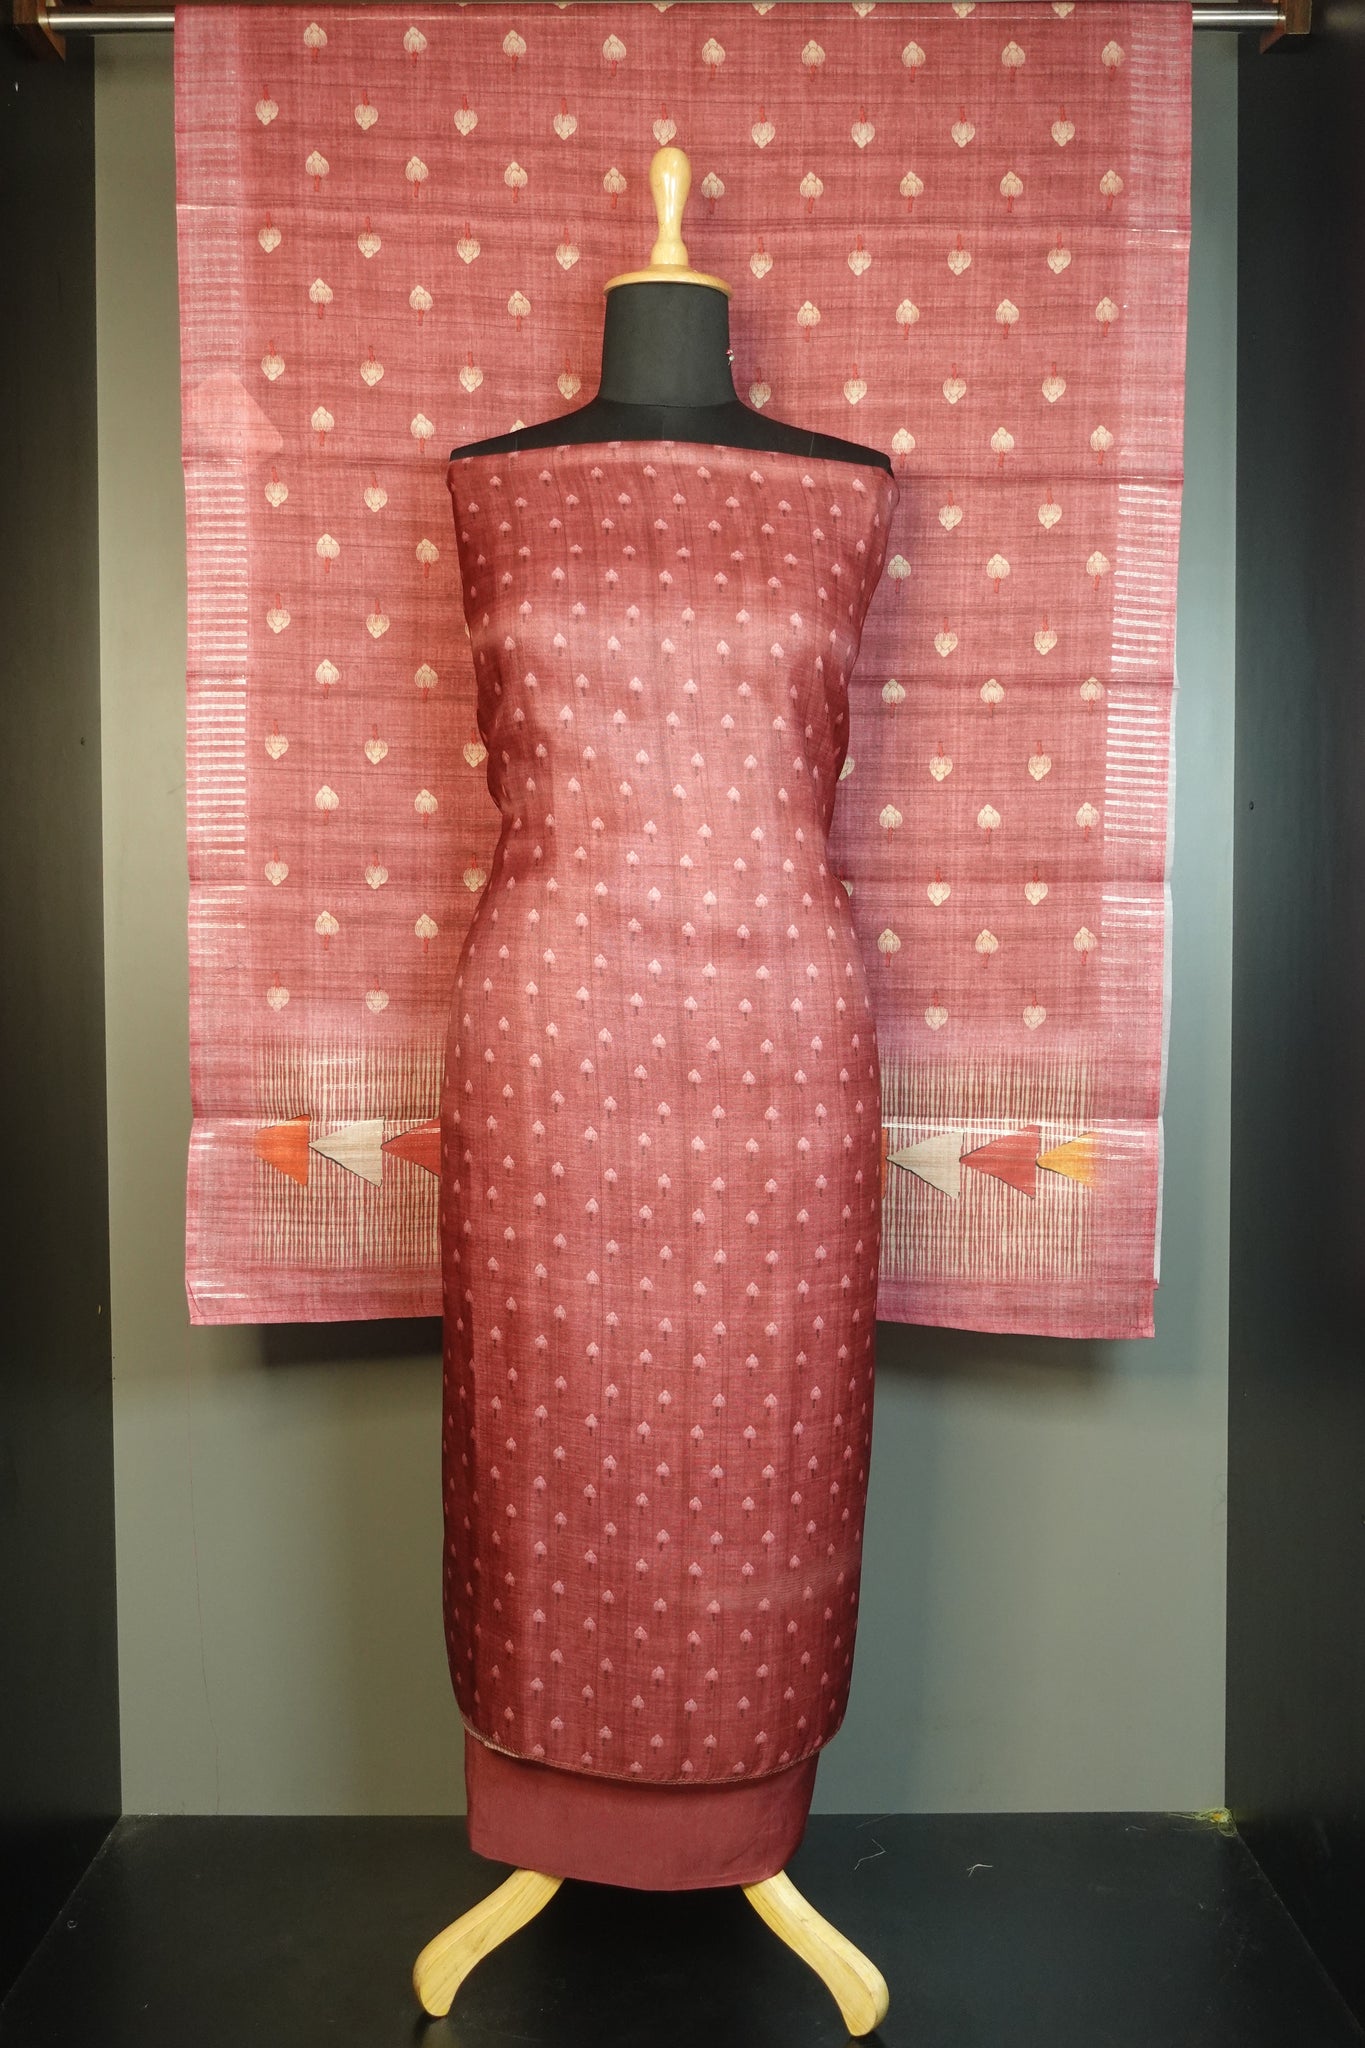 2020 ke Hand Painted Dress Ke Design/ Fabric painted Dress For Women/Hand Painting  Design. - YouTube